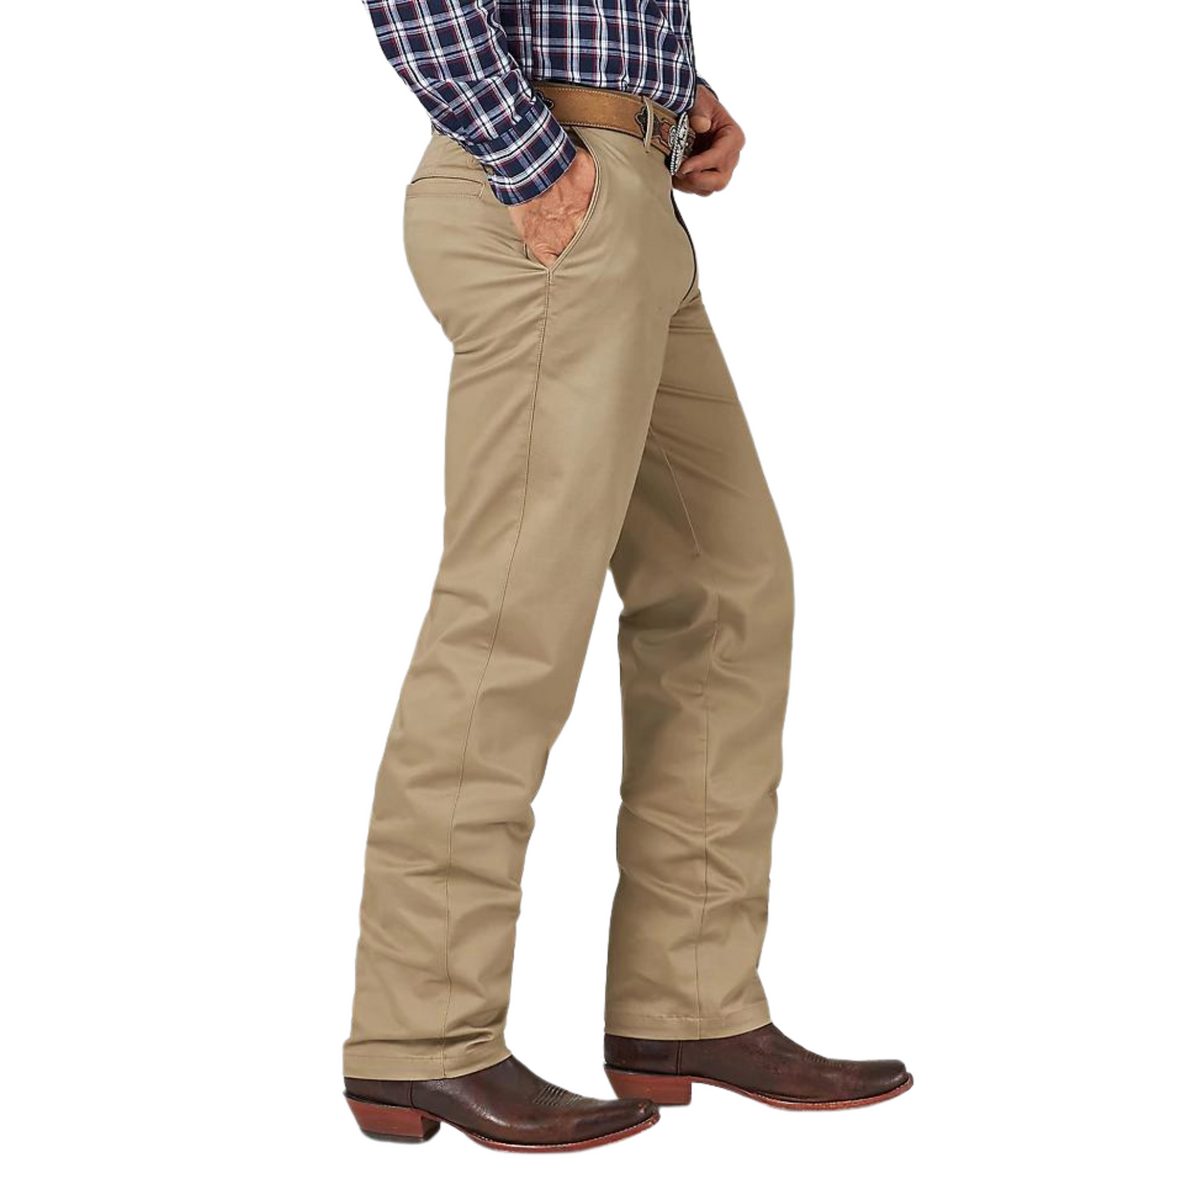 Men's Wrangler Riata Flat Front Khaki Pants